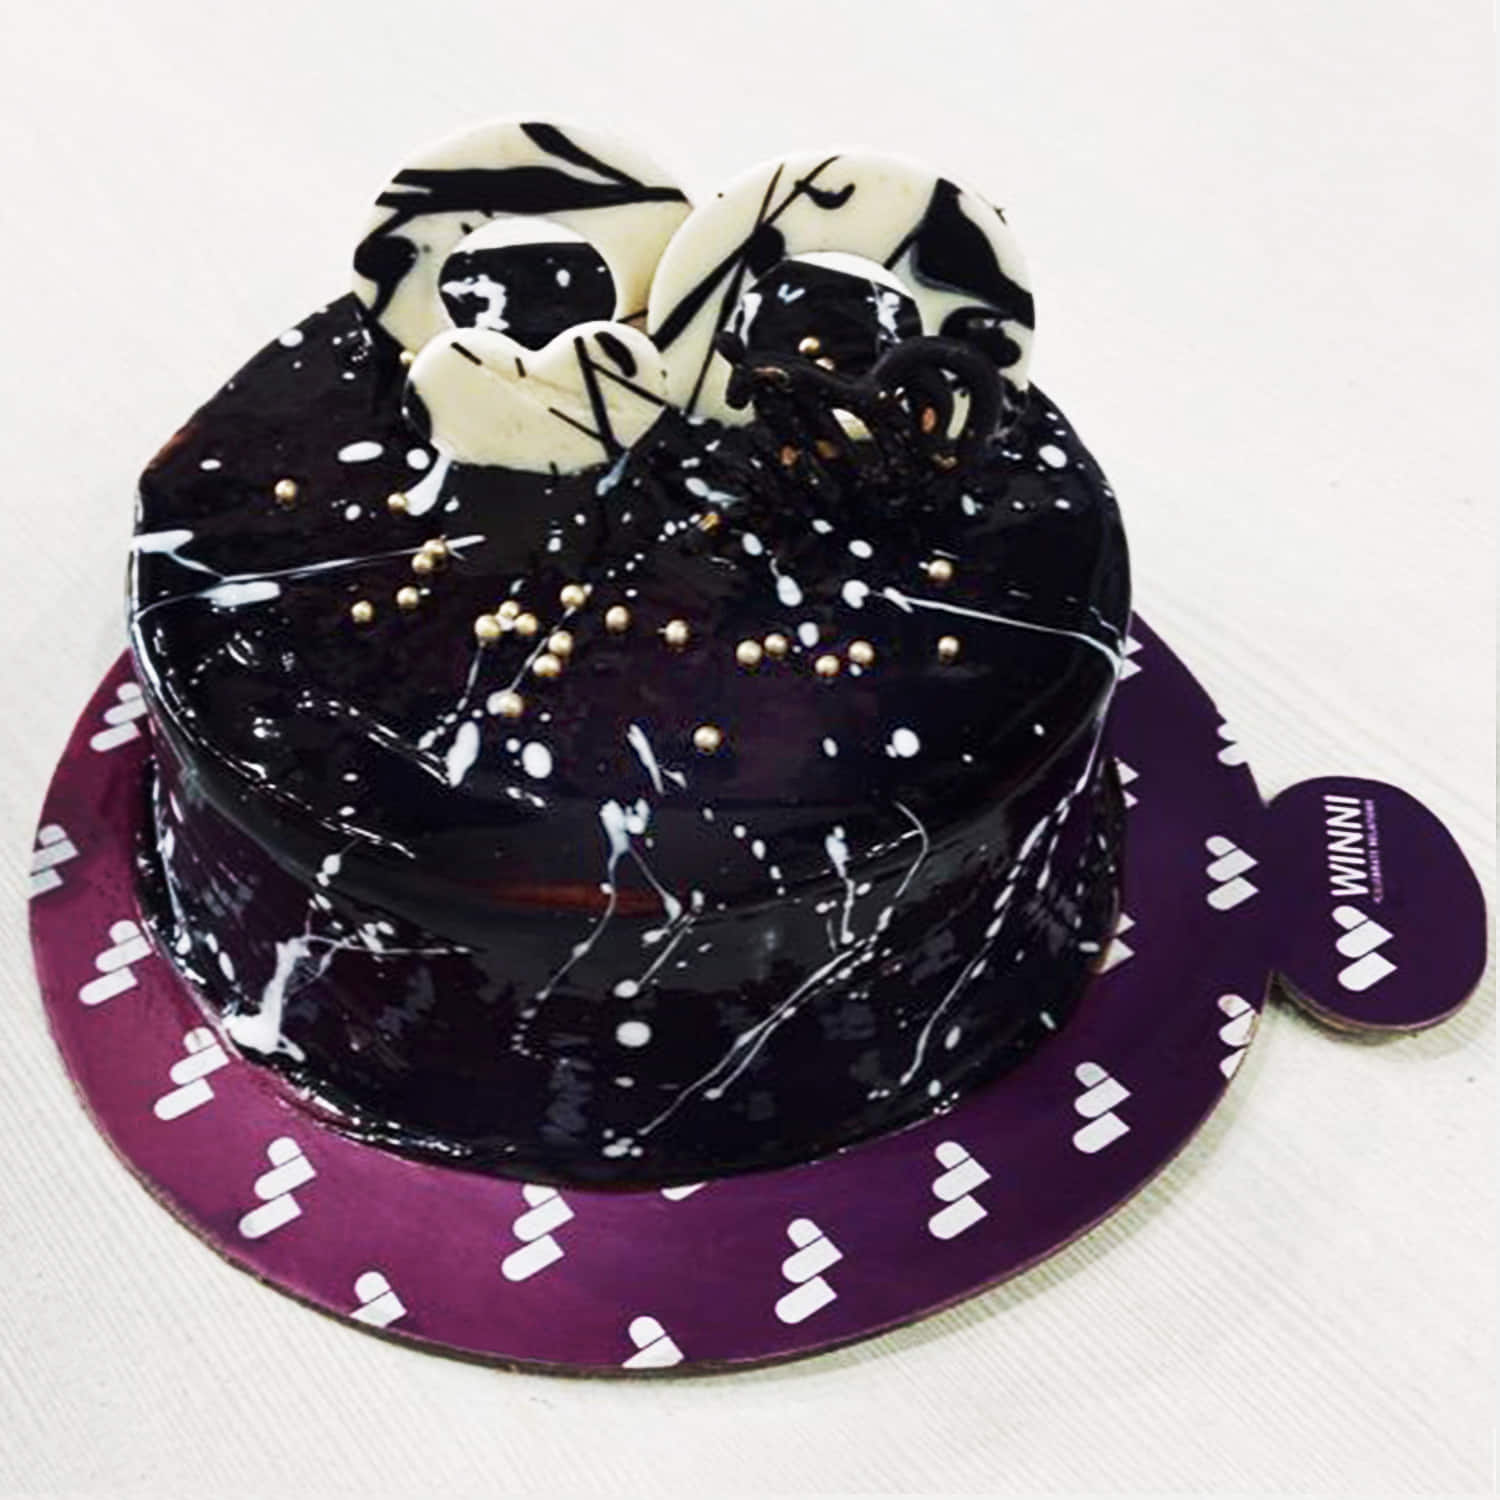 Black Chocolate Cake Recipe - Sweet Fix Baker